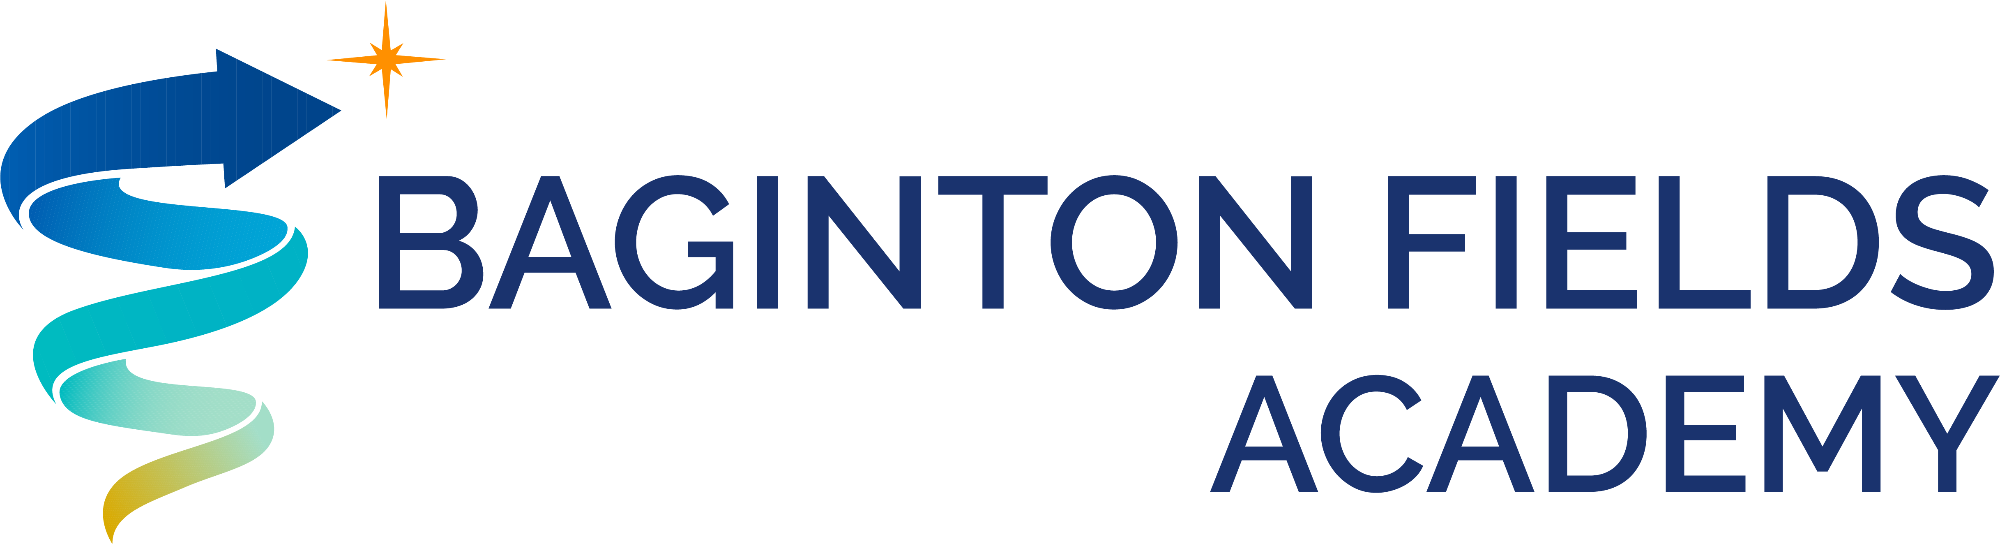 Baginton Fields Academy logo